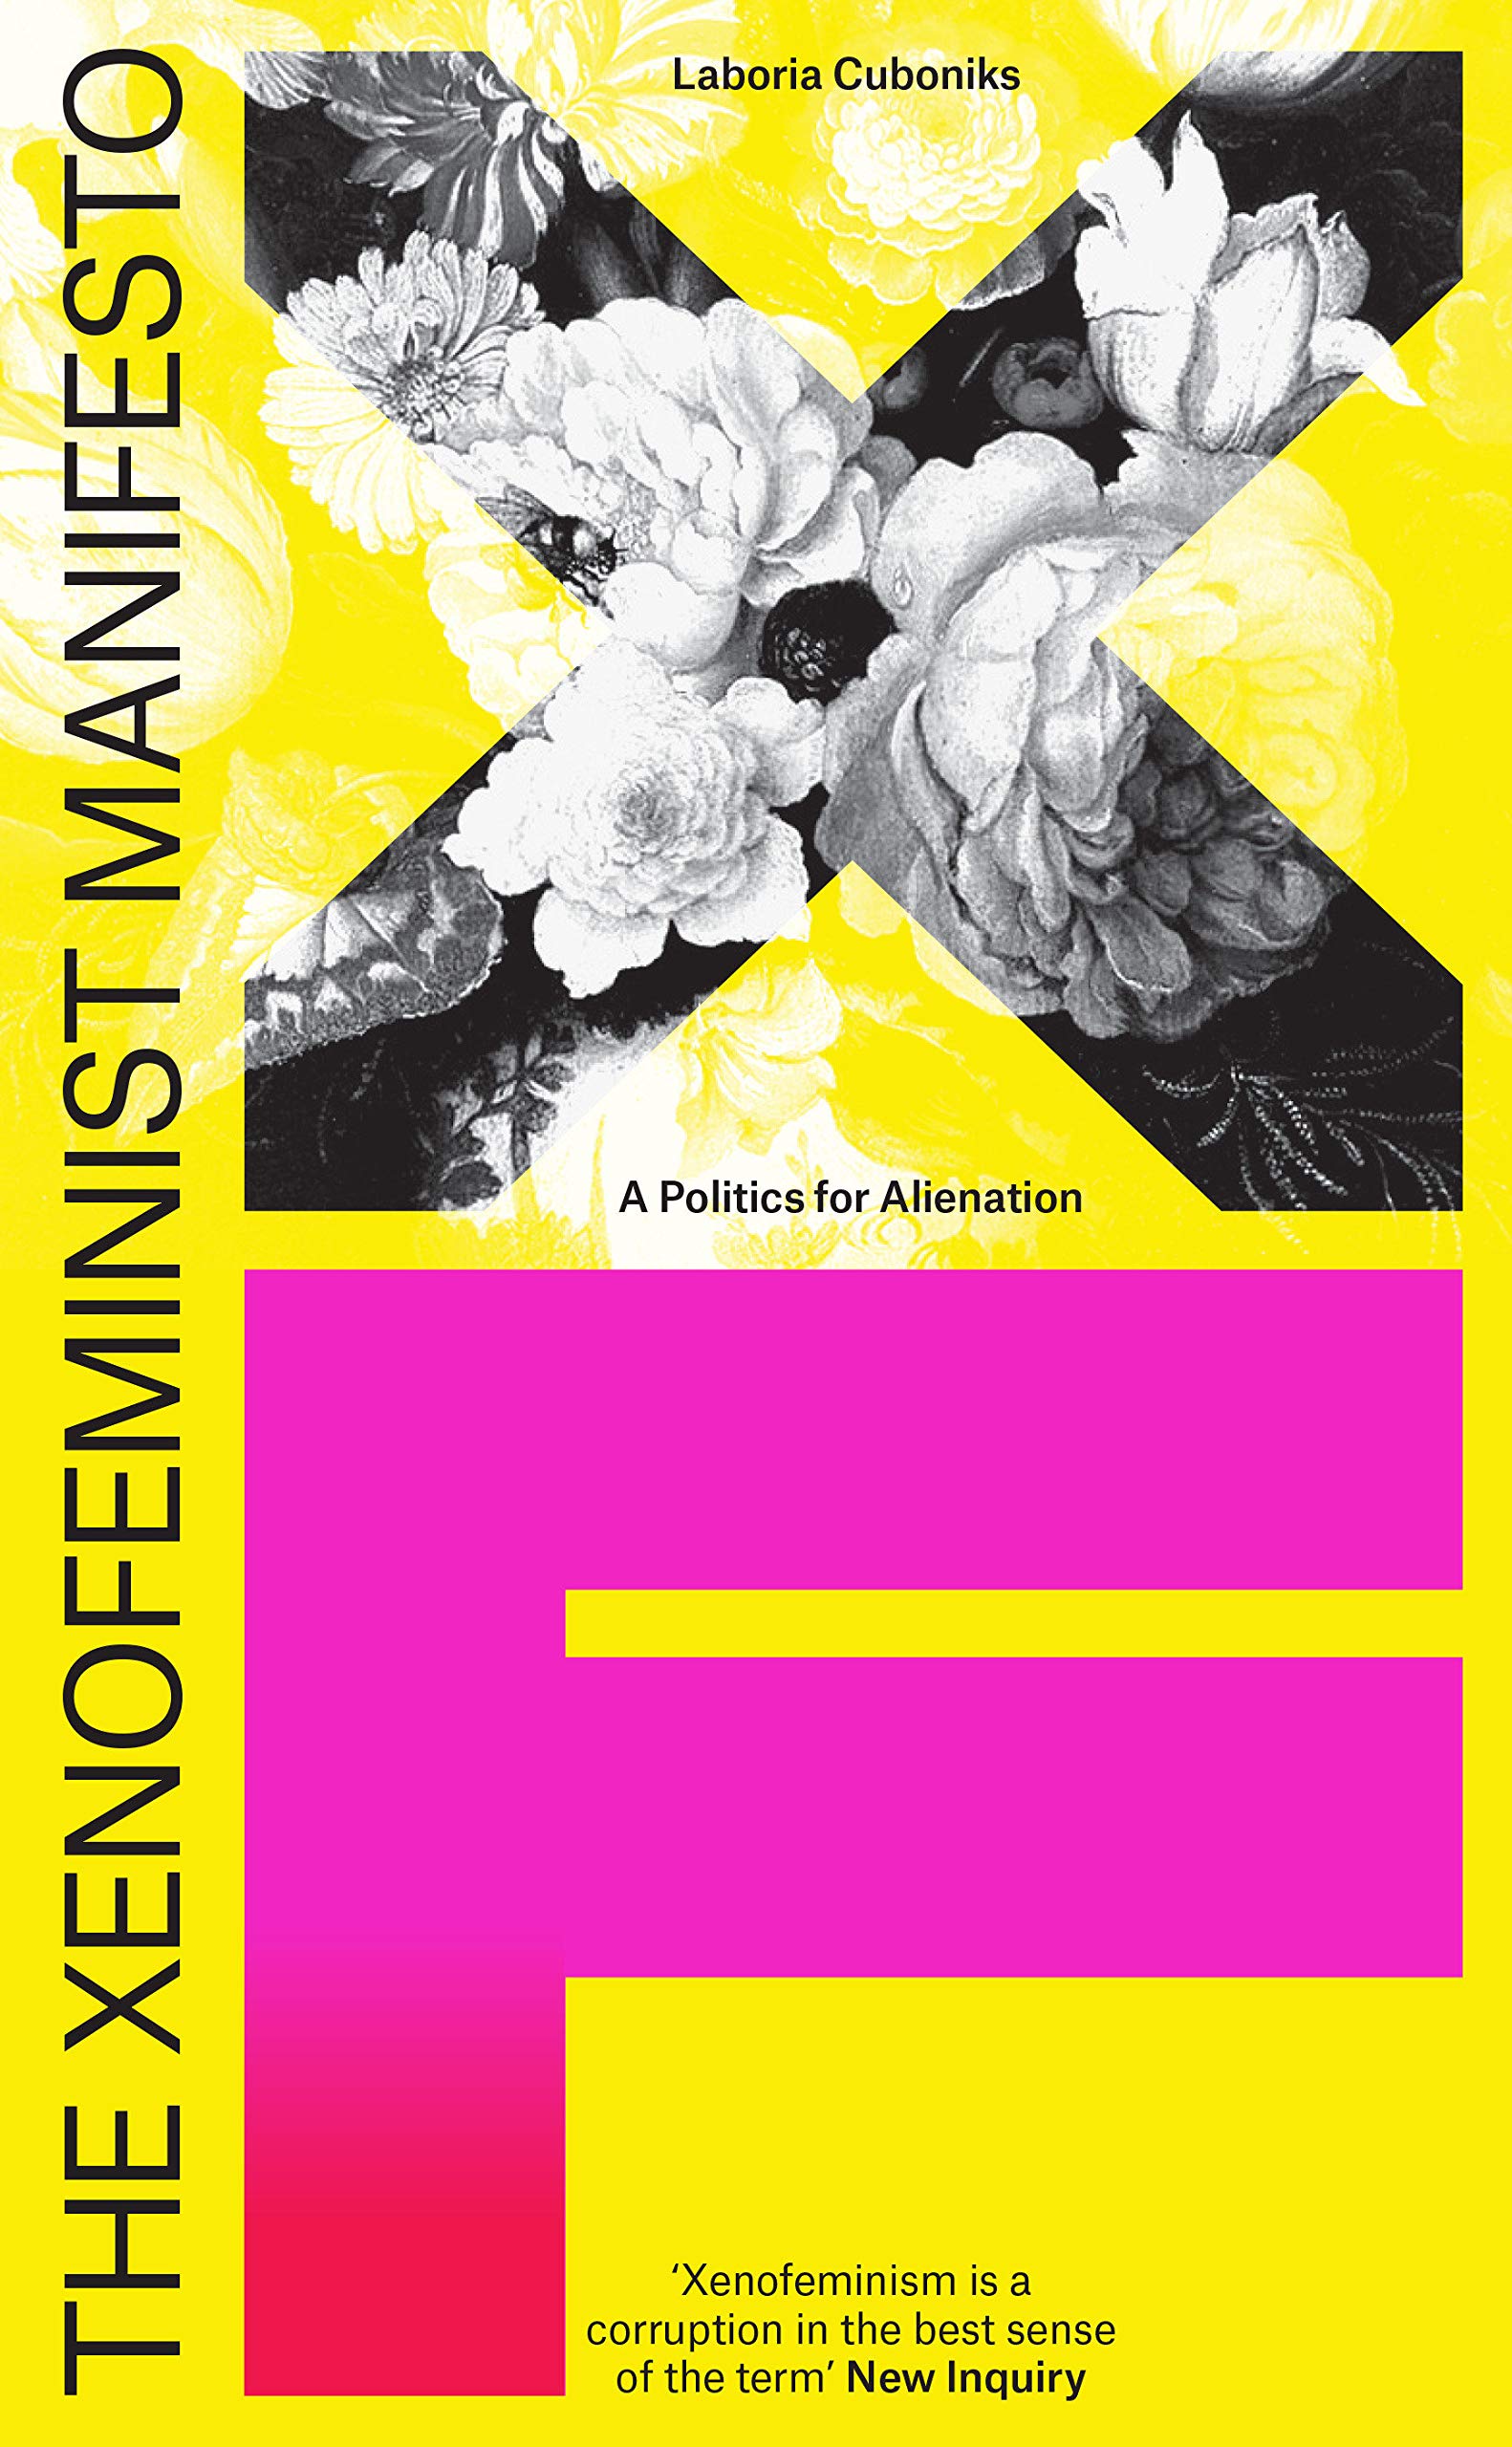 Xenofeminist Manifesto | Laboria Cuboniks